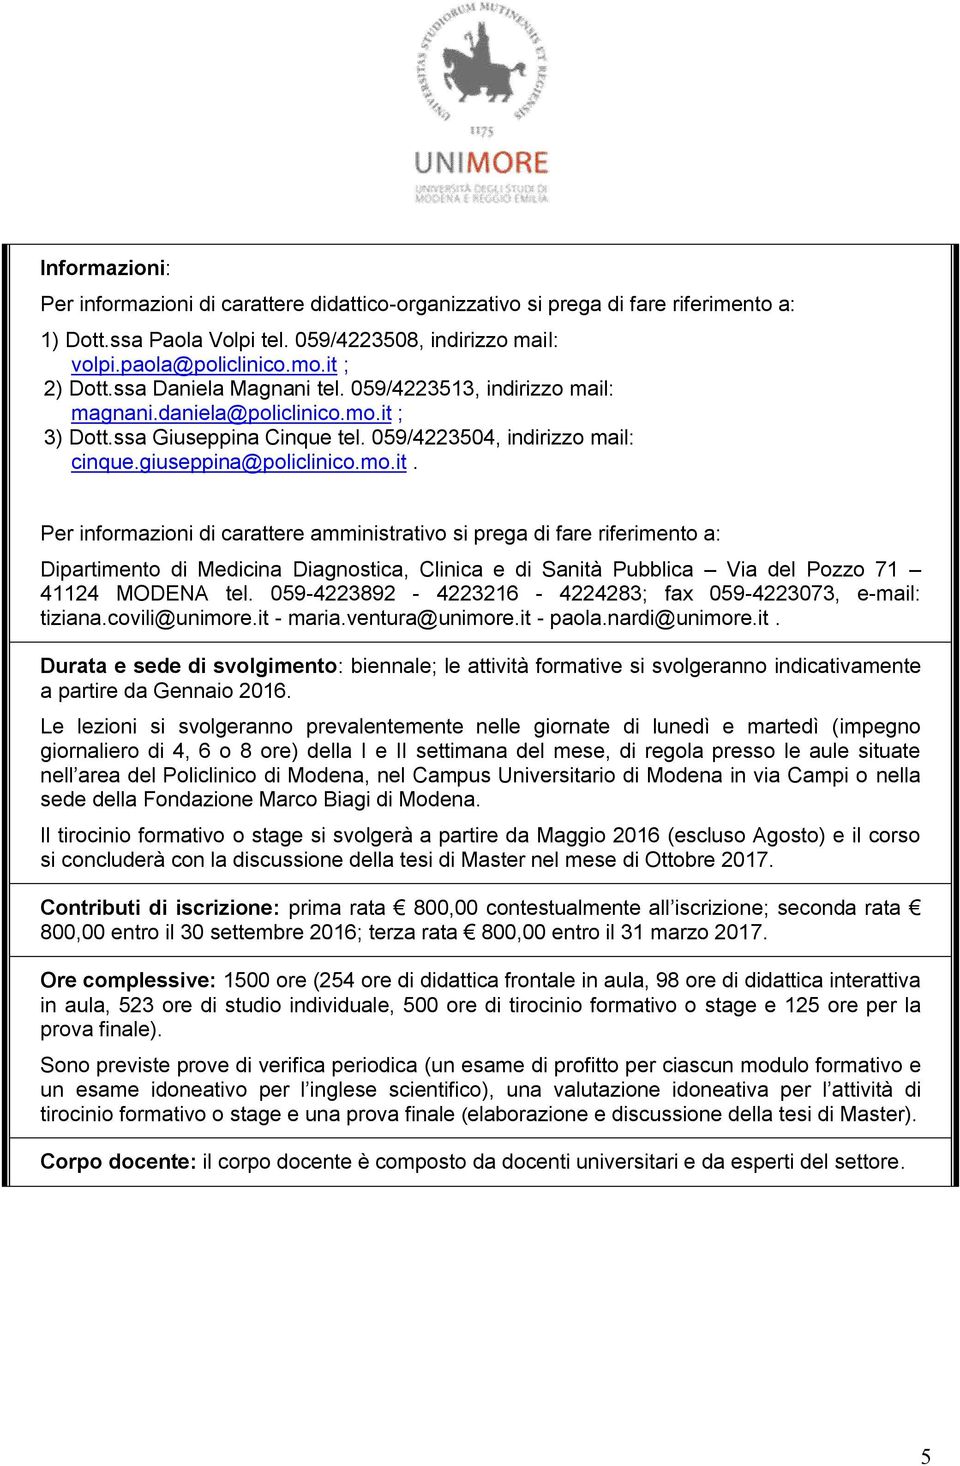 ; 3) Dott.ssa Giuseppina Cinque tel. 059/4223504, indirizzo mail: cinque.giuseppina@policlinico.mo.it.